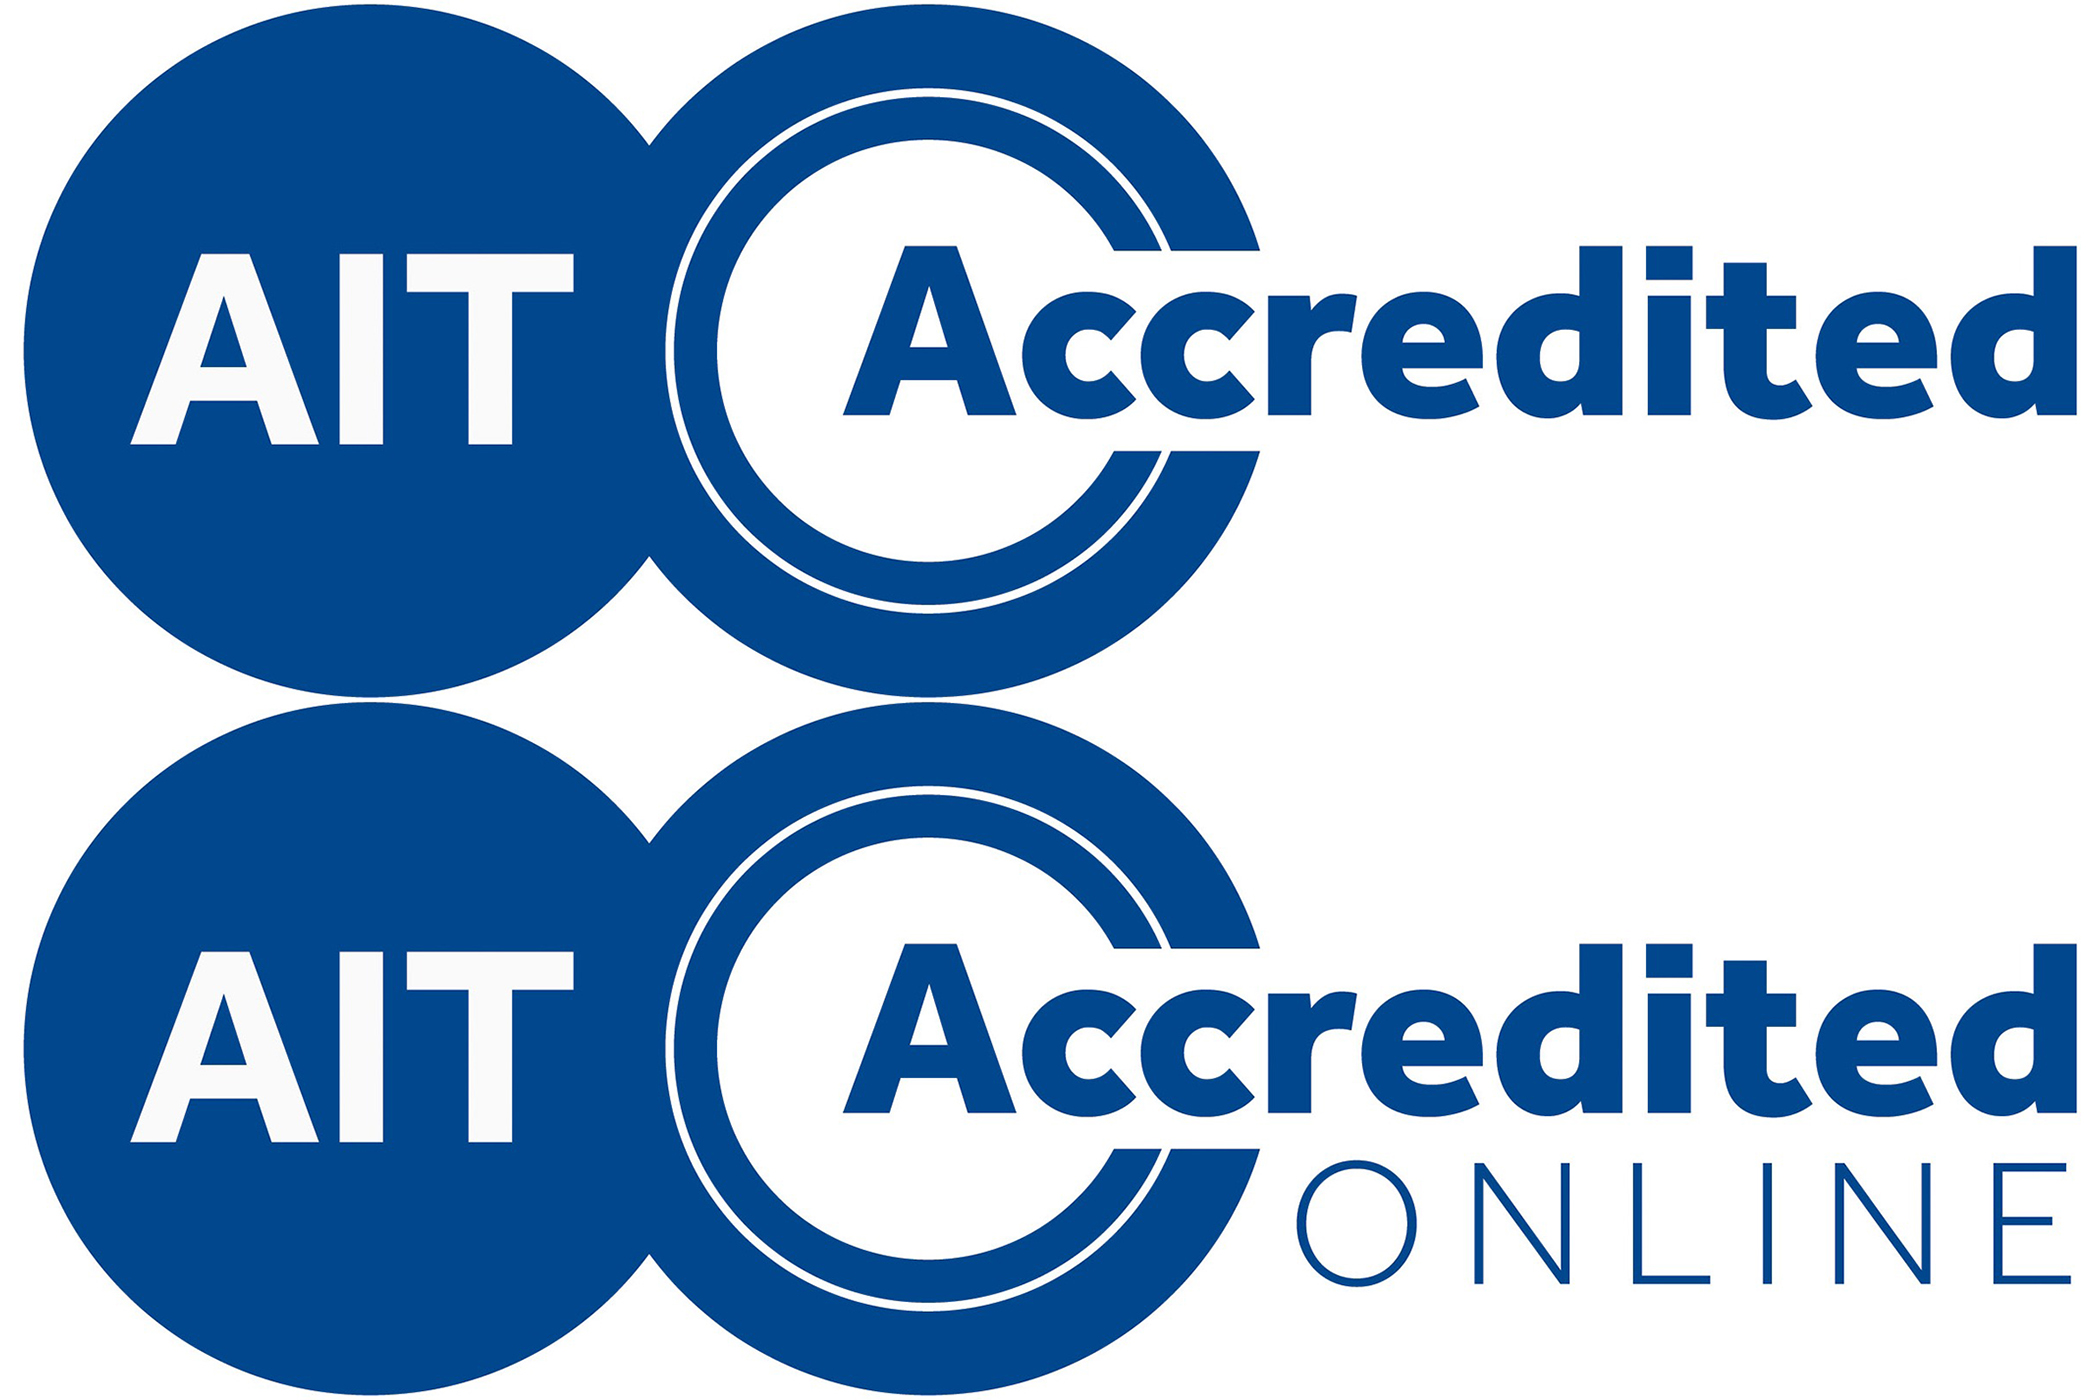 AIT Accreditation logo